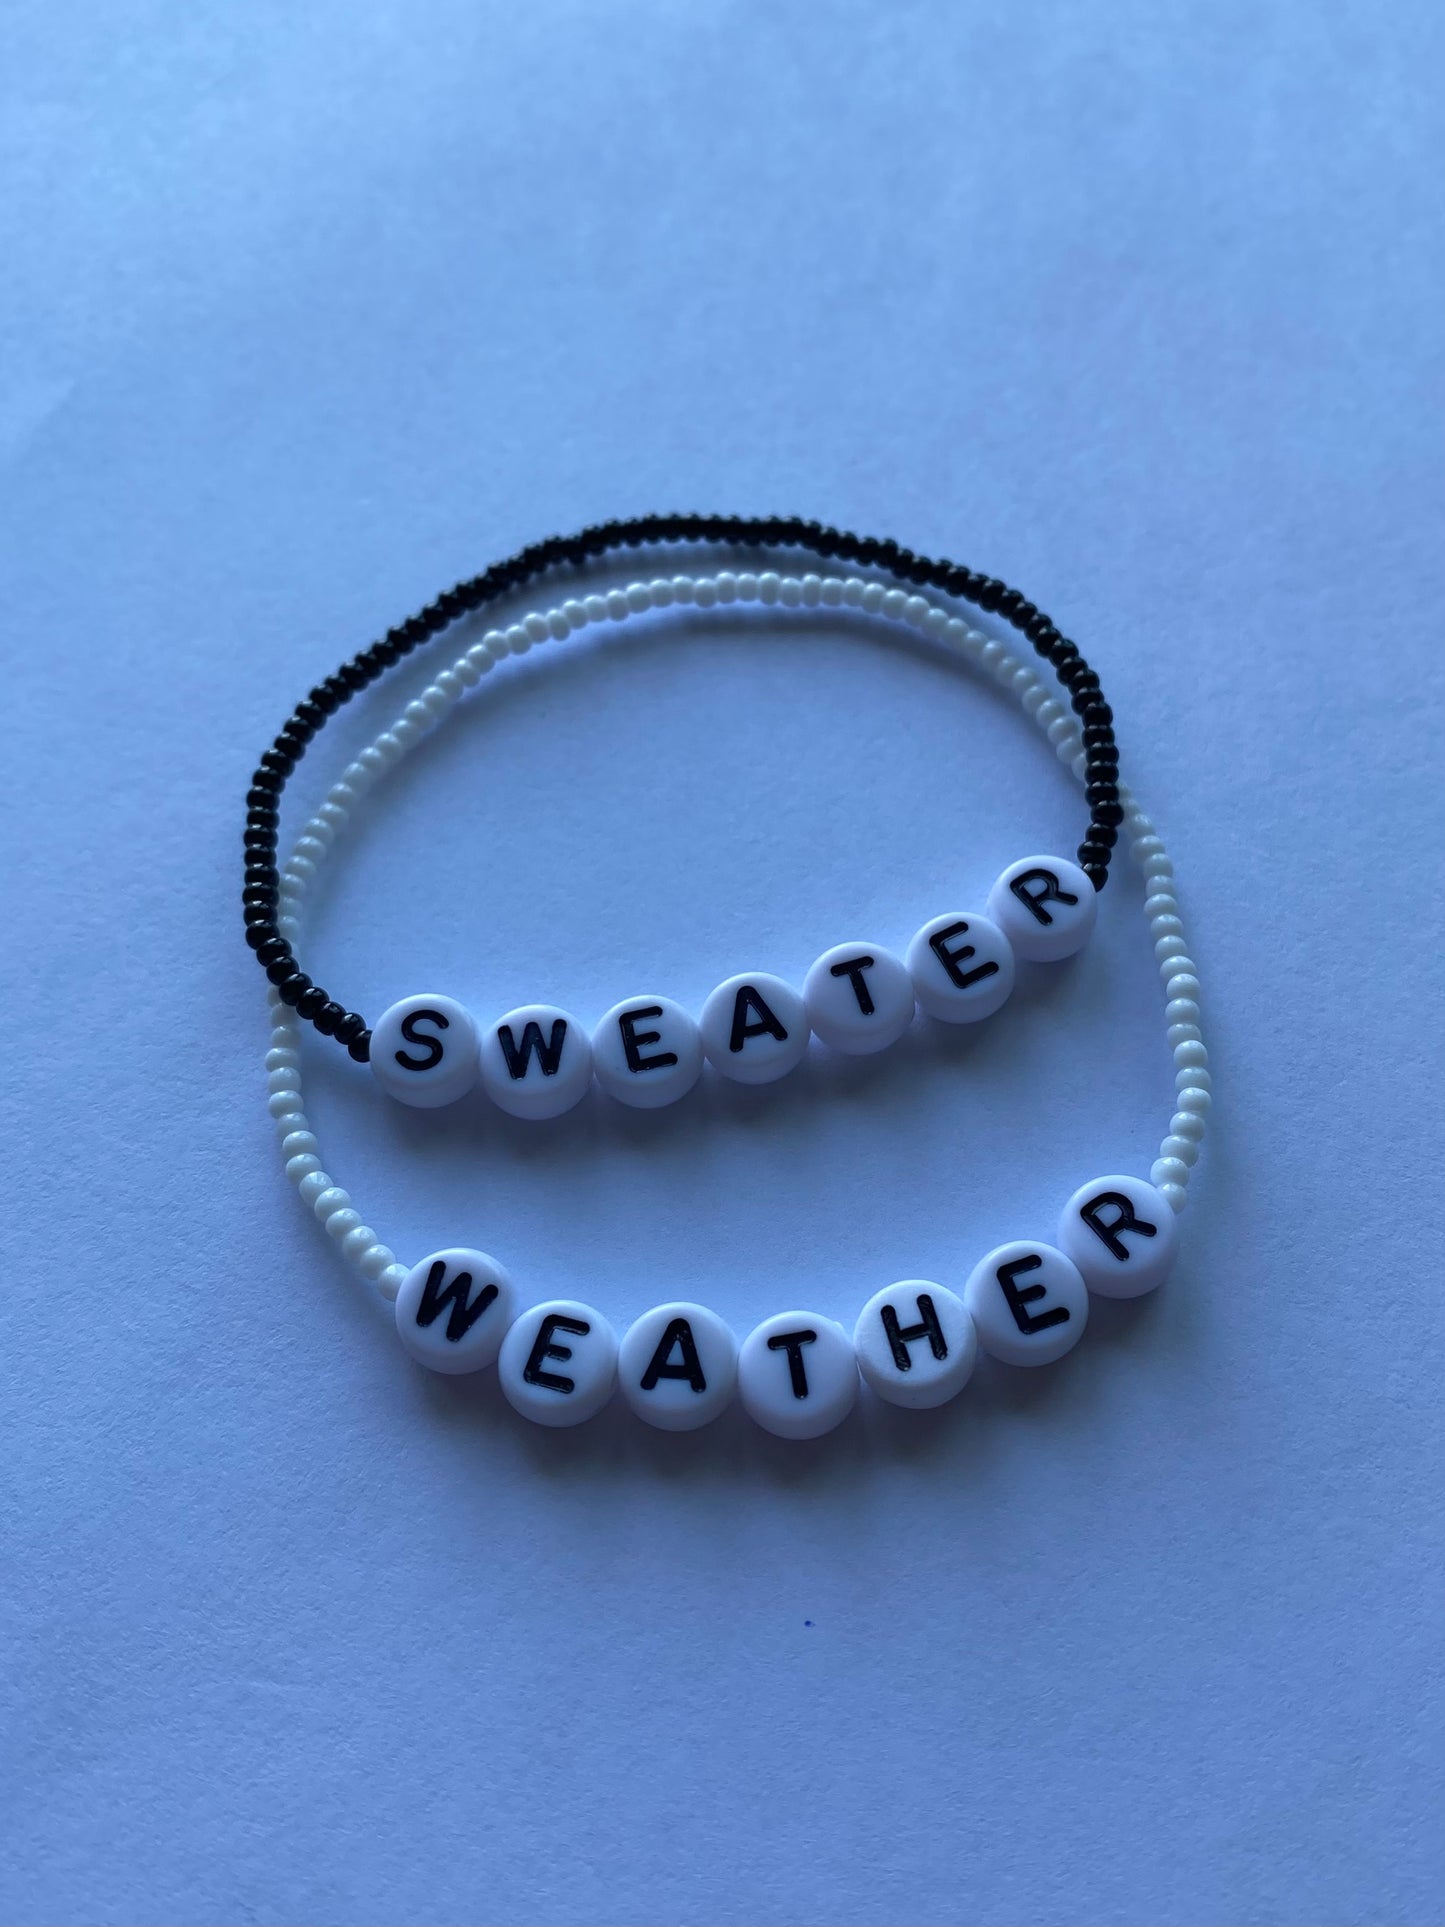 Sweater Weather matching bracelets